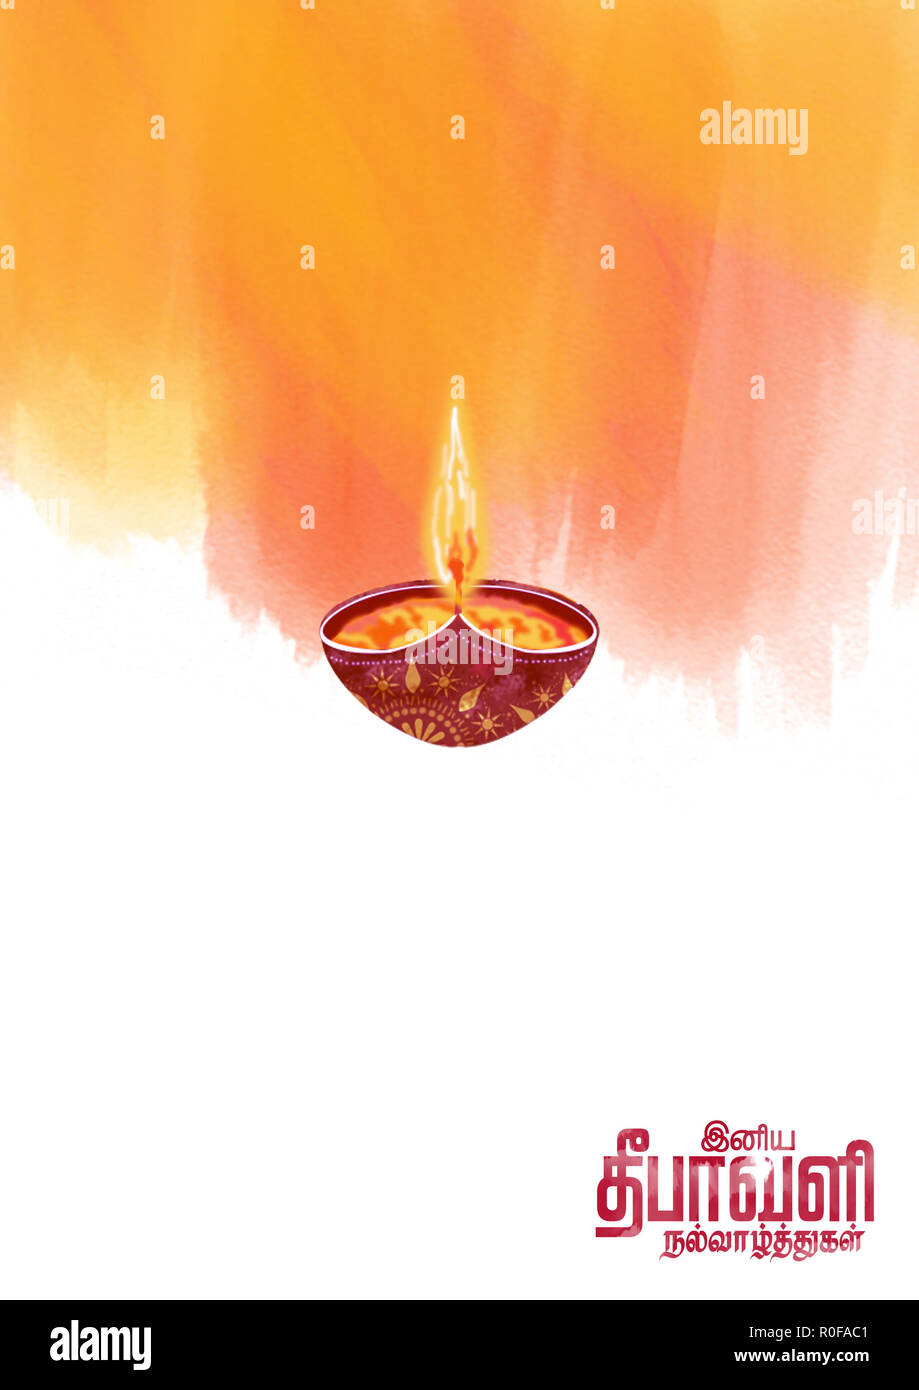 Abstract beautiful Happy Diwali wallpaper design Stock Photo - Alamy